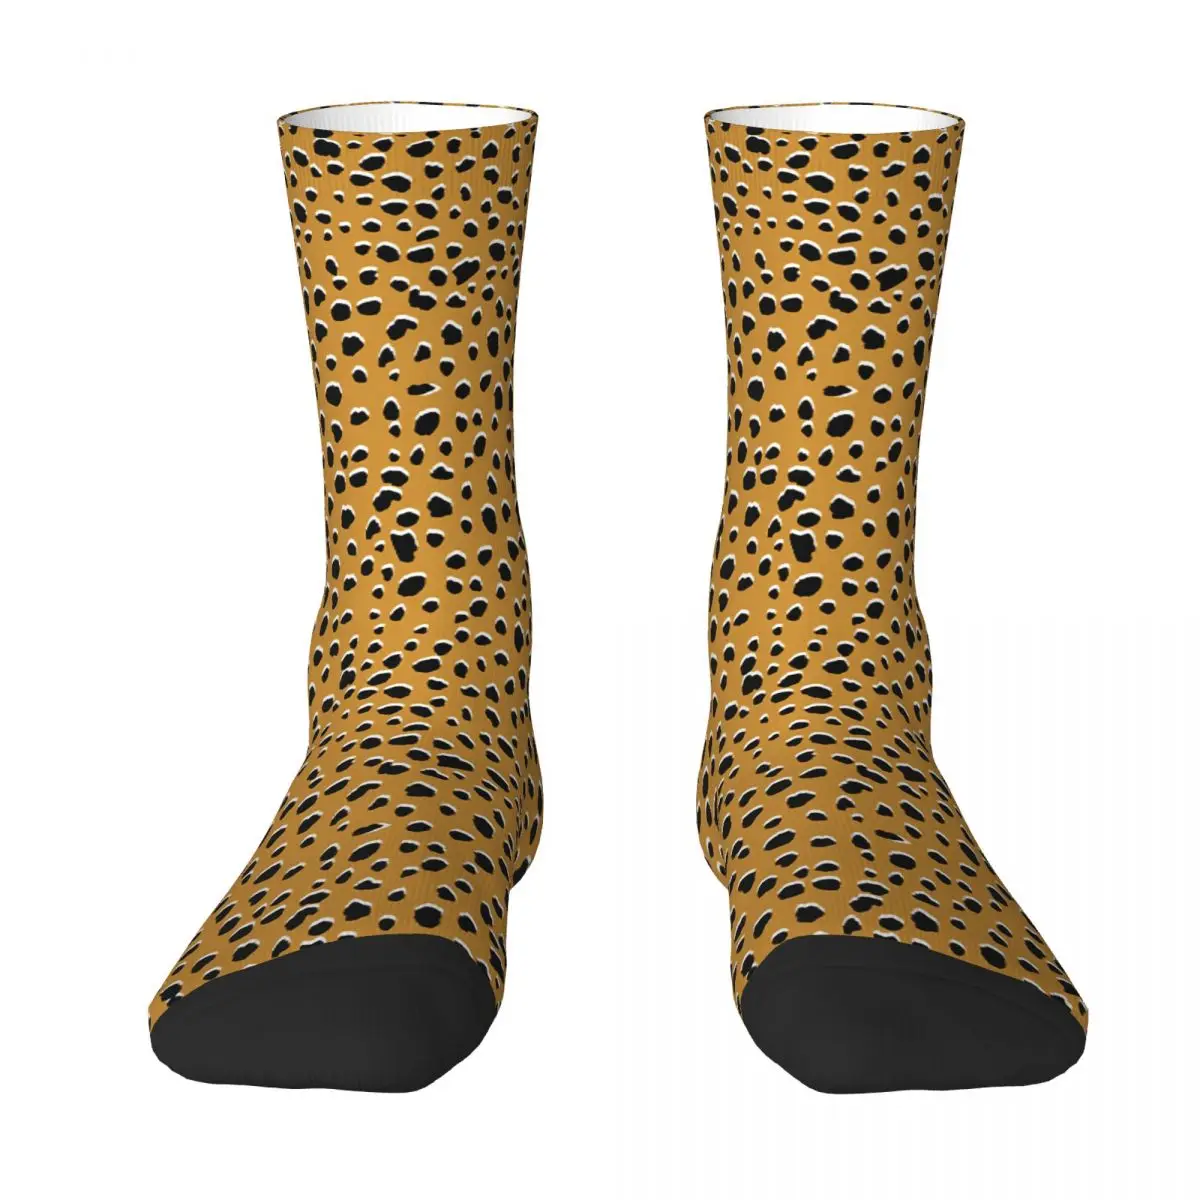 Seamless Leopard Cheetah Skin Pattern Adult Socks,Unisex socks,men Socks women Socks women s retro leopard print socks fashion female cotton blends street popular stripe leopard short socks for all seasons